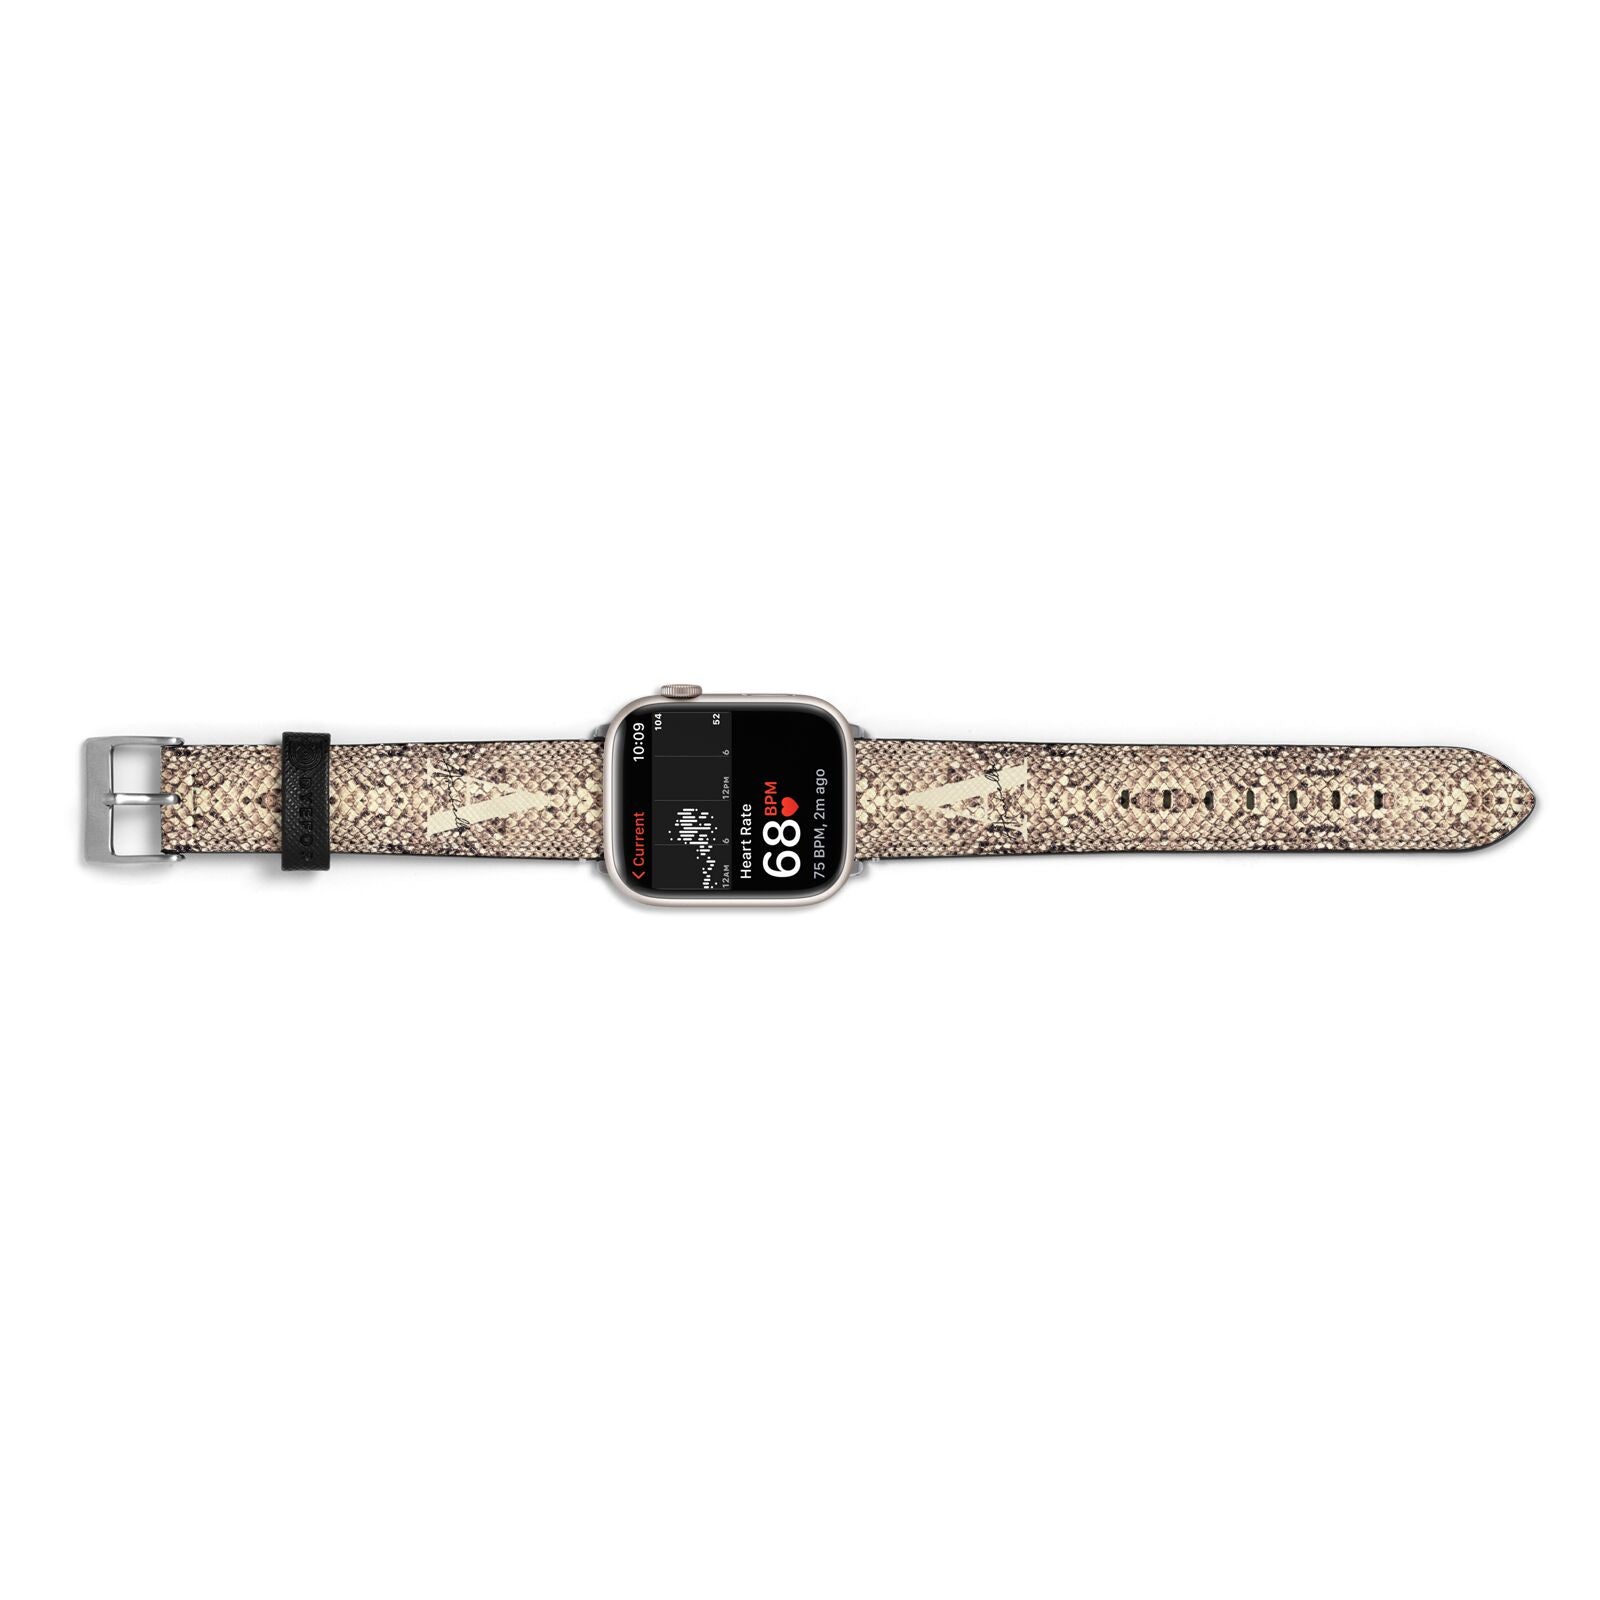 Personalised Snake Skin Effect Apple Watch Strap Size 38mm Landscape Image Silver Hardware